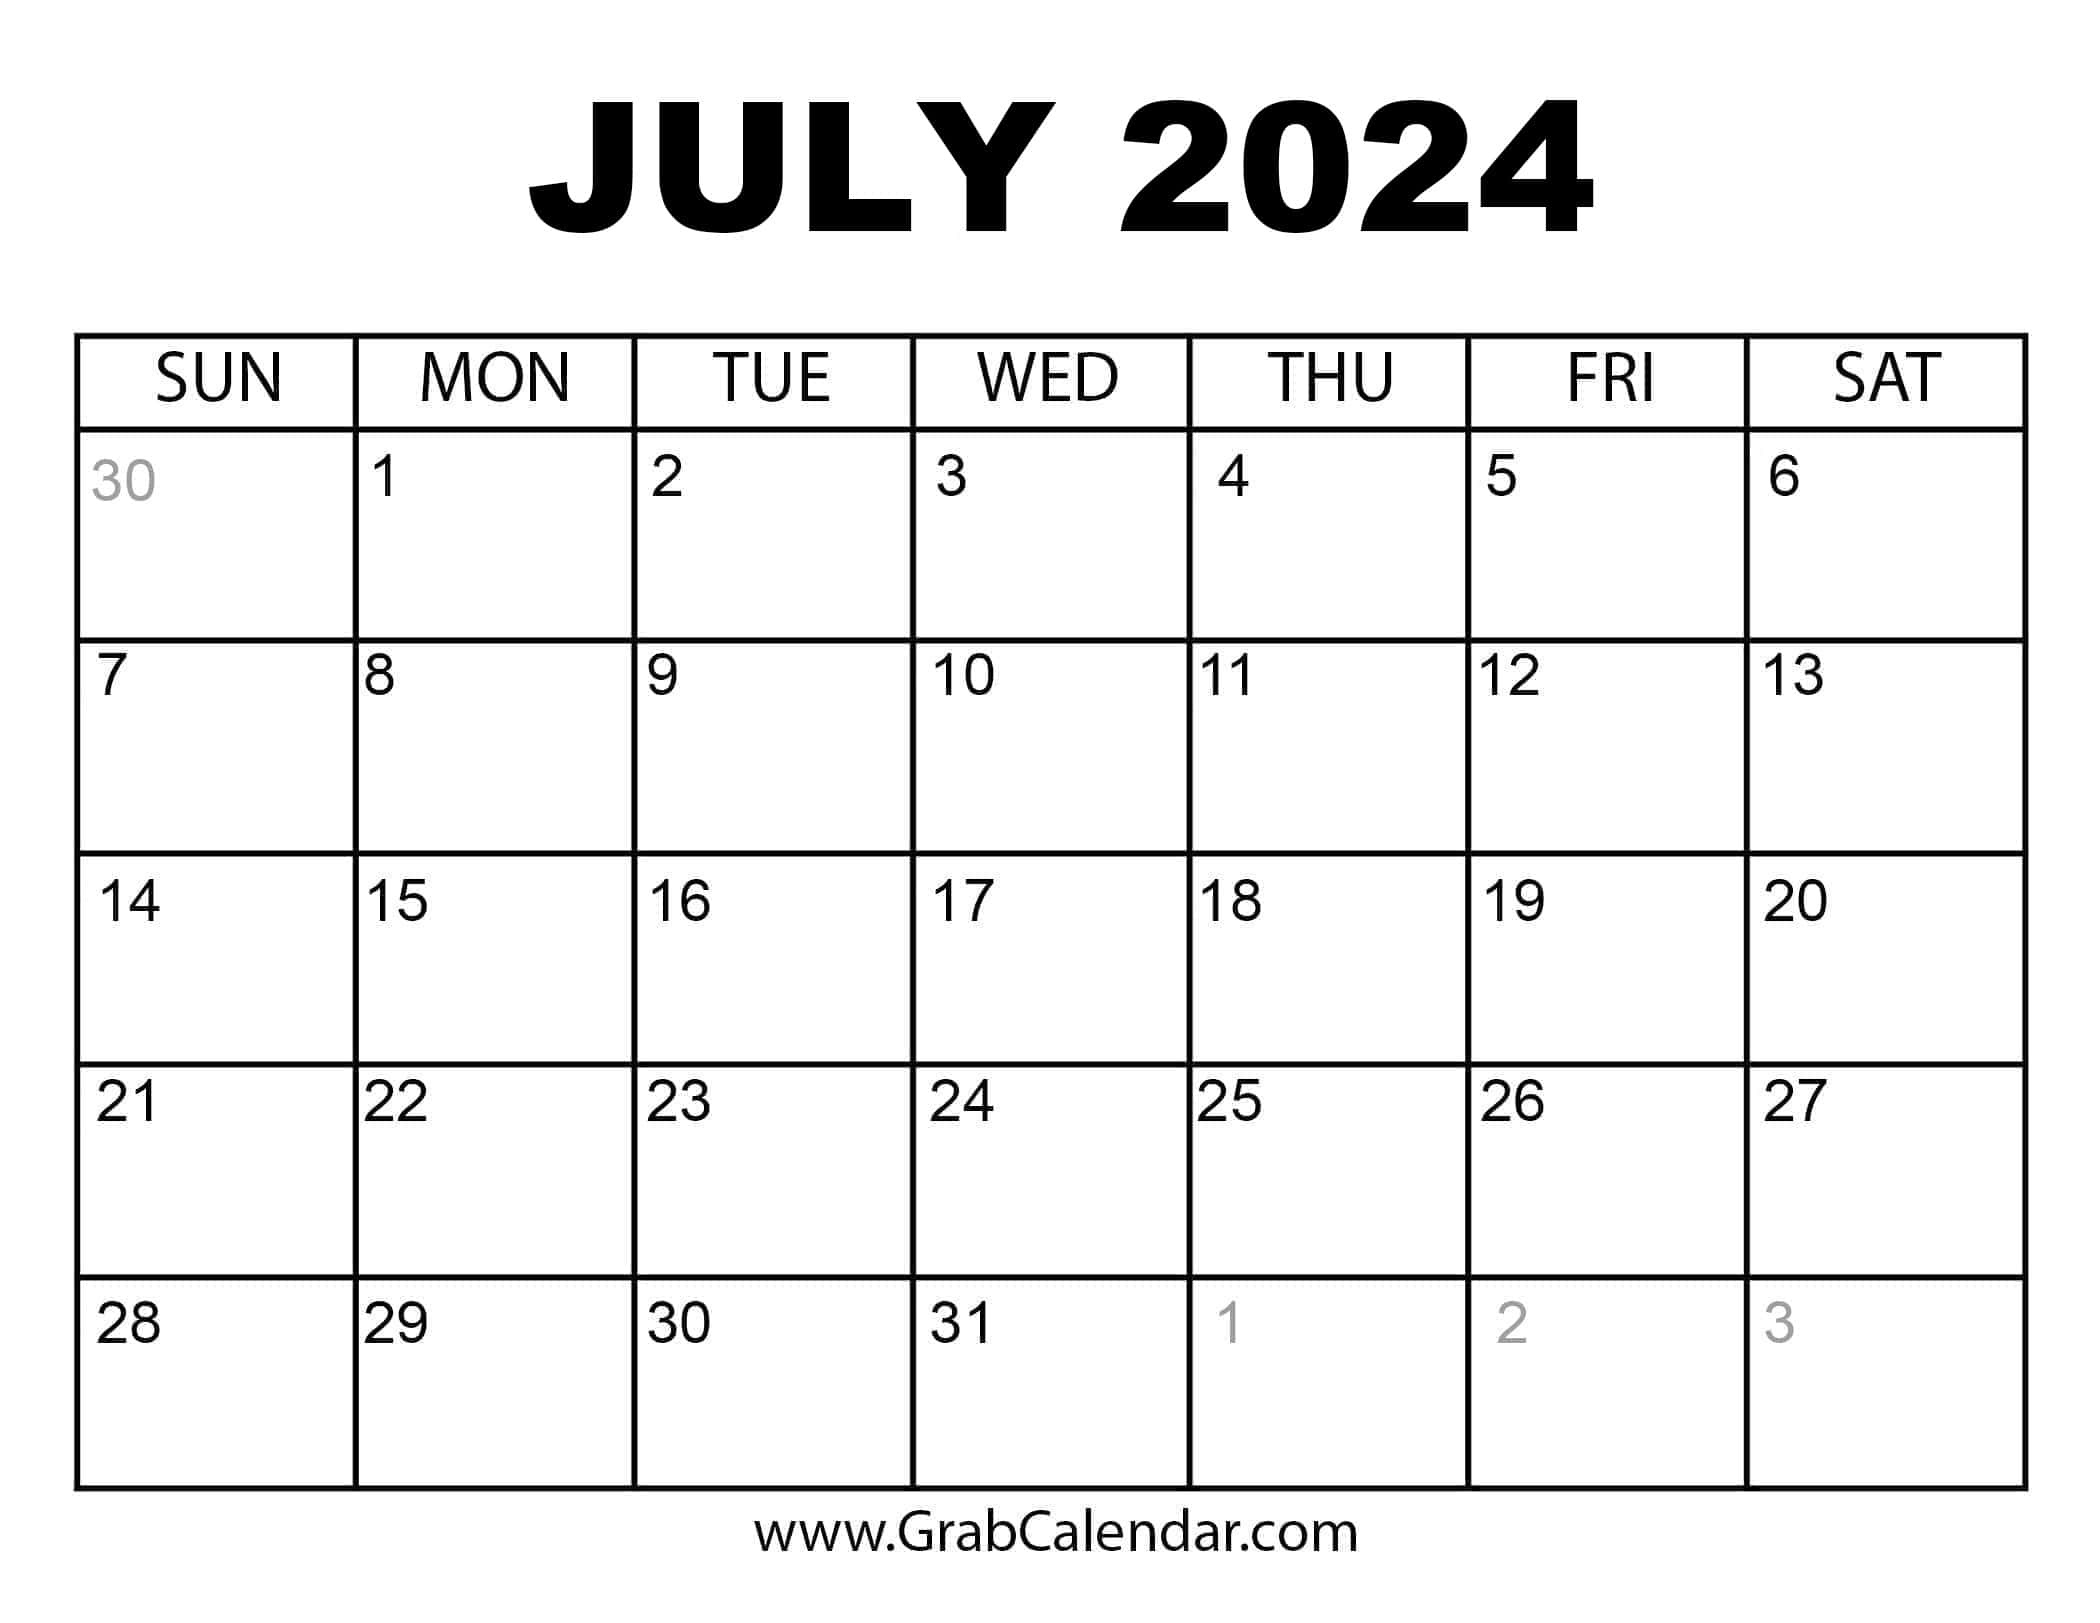 Printable July 2024 Calendar regarding July 2024 Calendar Weather